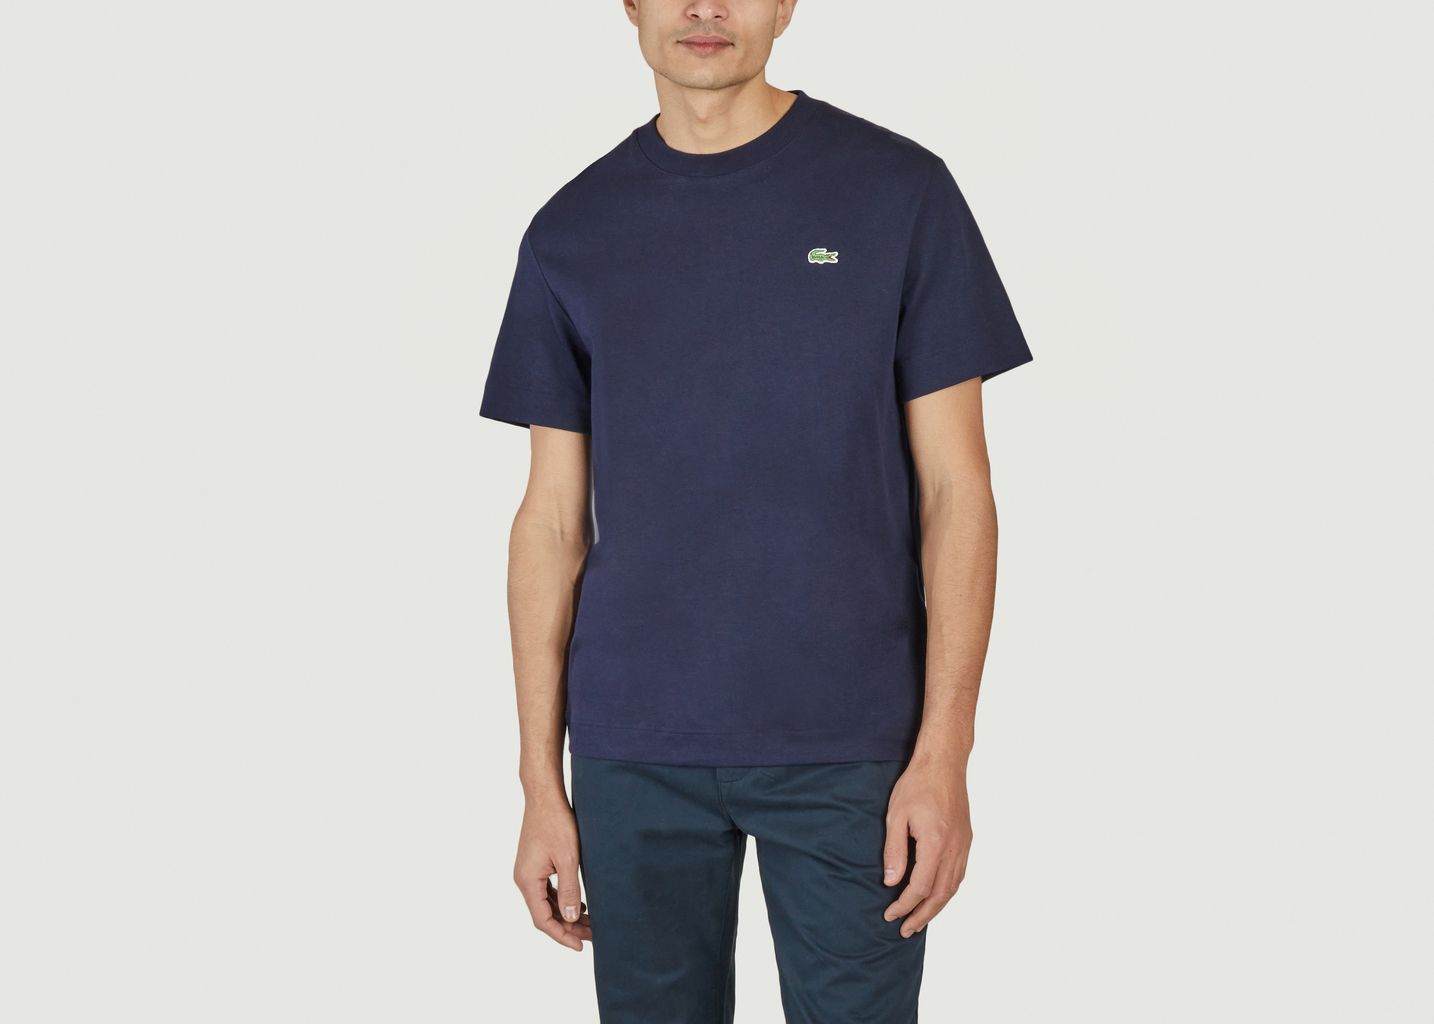 Unisex round-neck T-shirt in plain organic cotton - Lacoste